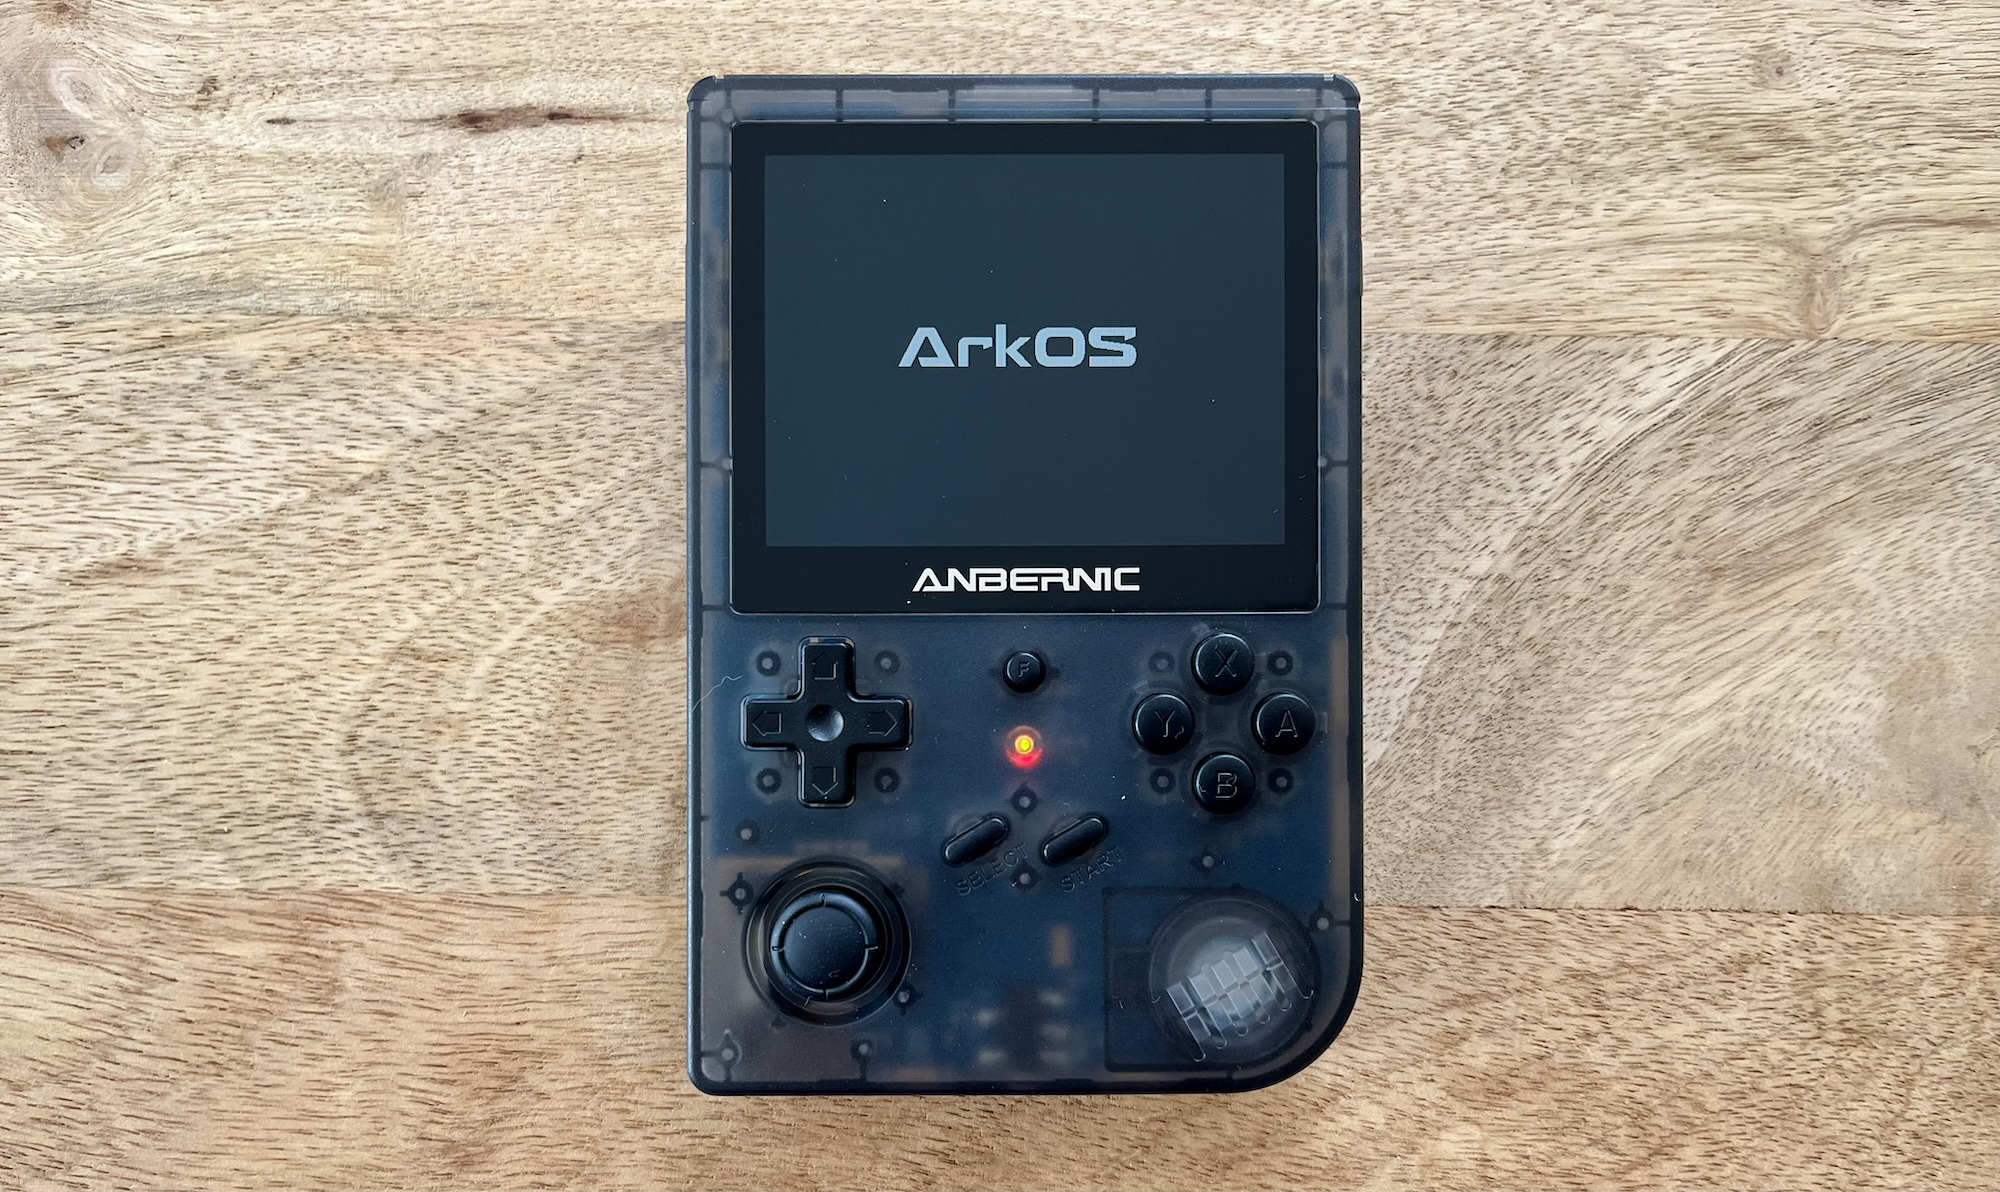 Anbernic RG351V mit ArkOS